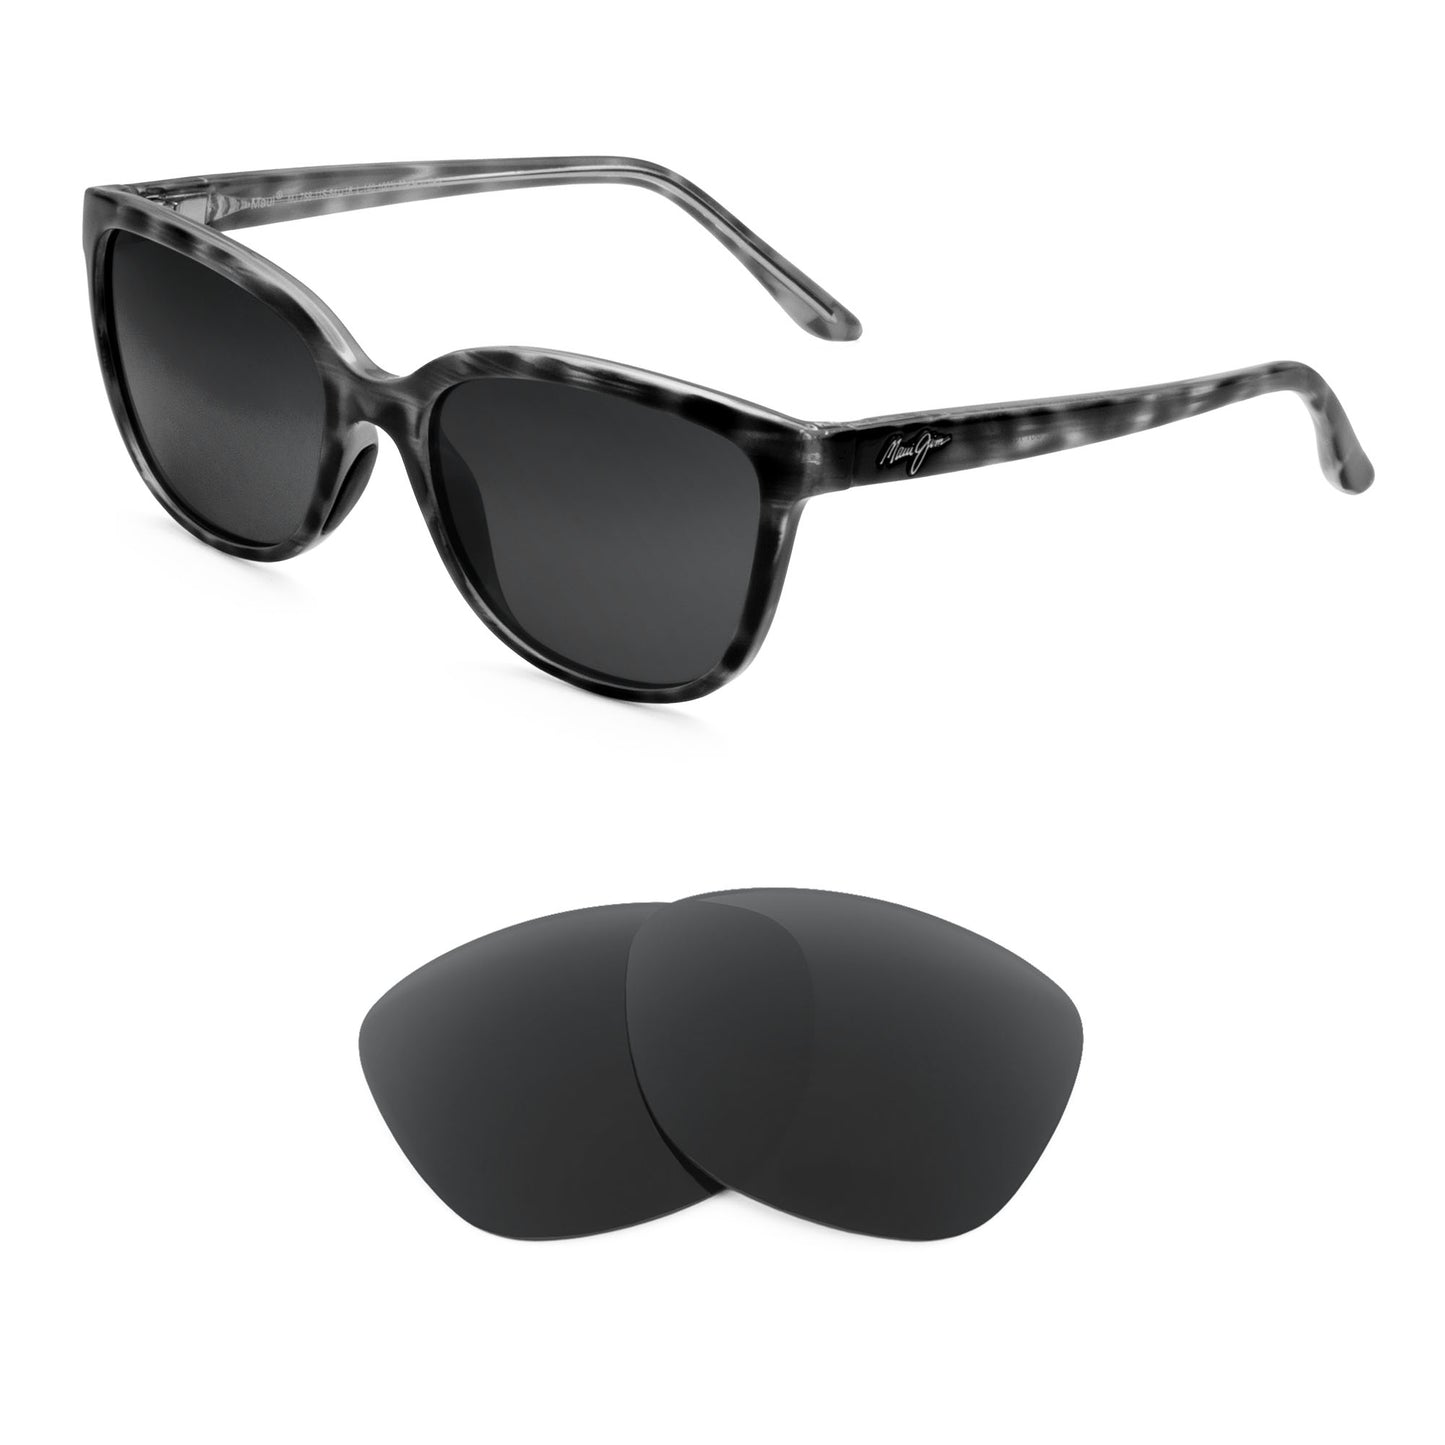 Maui Jim Honi MJ758 sunglasses with replacement lenses